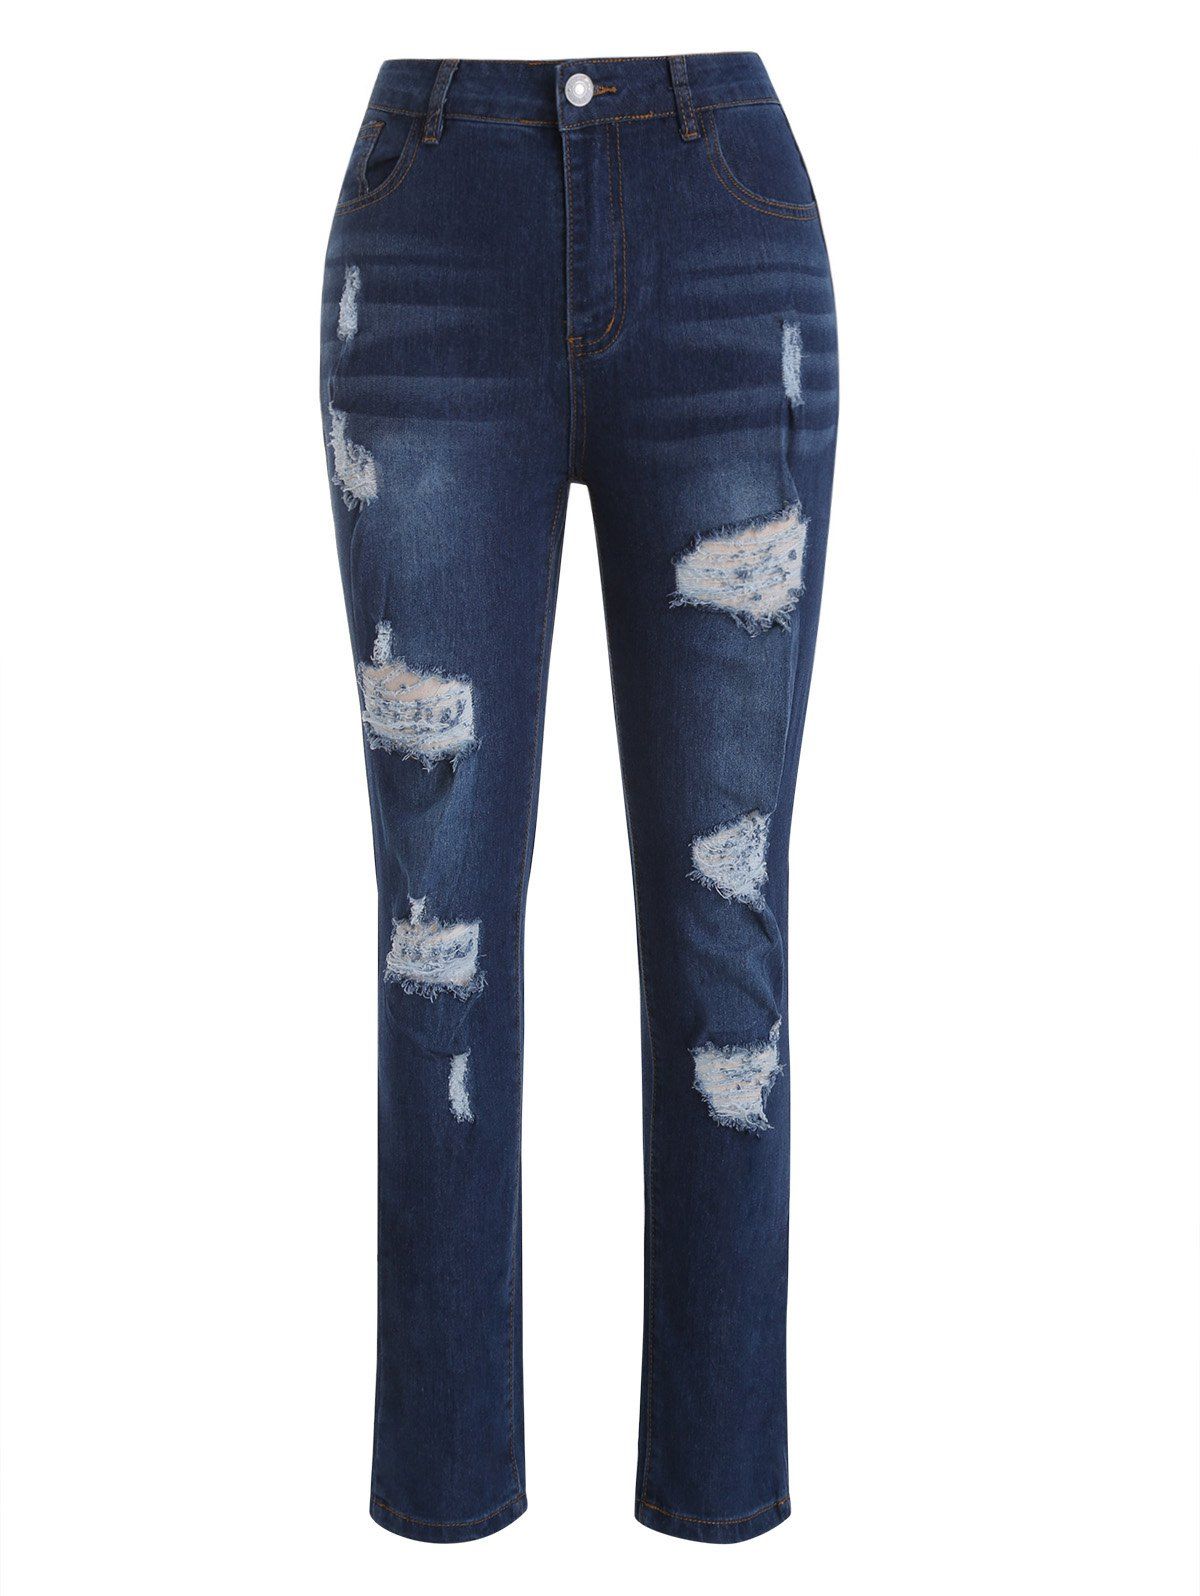 Ripped Jeans Pockets Zipper Fly Jeans Dark Wash Distressed Skinny Denim Pants 